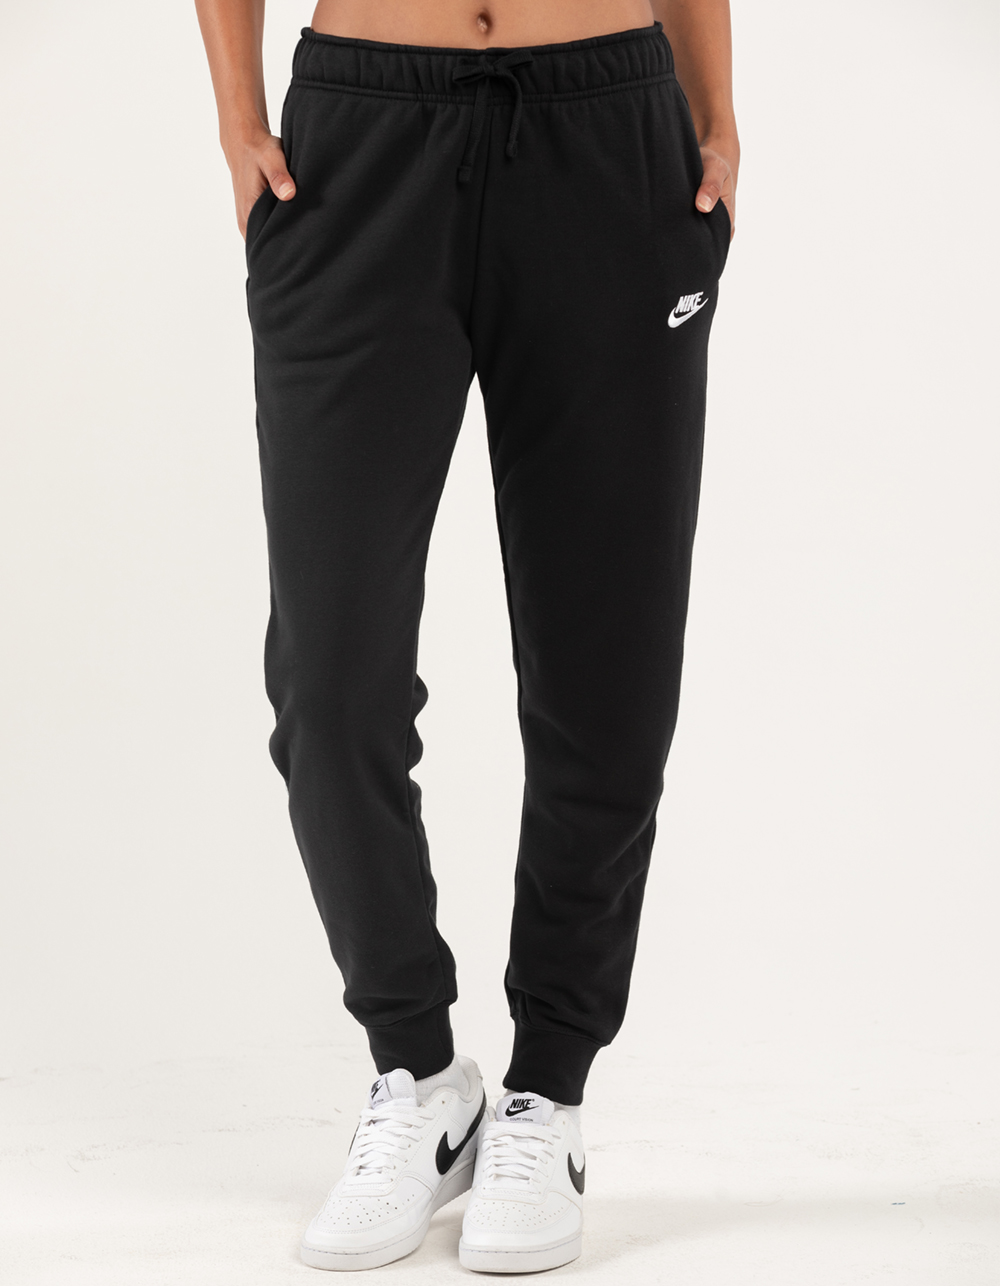  Black Nike Sweatpants